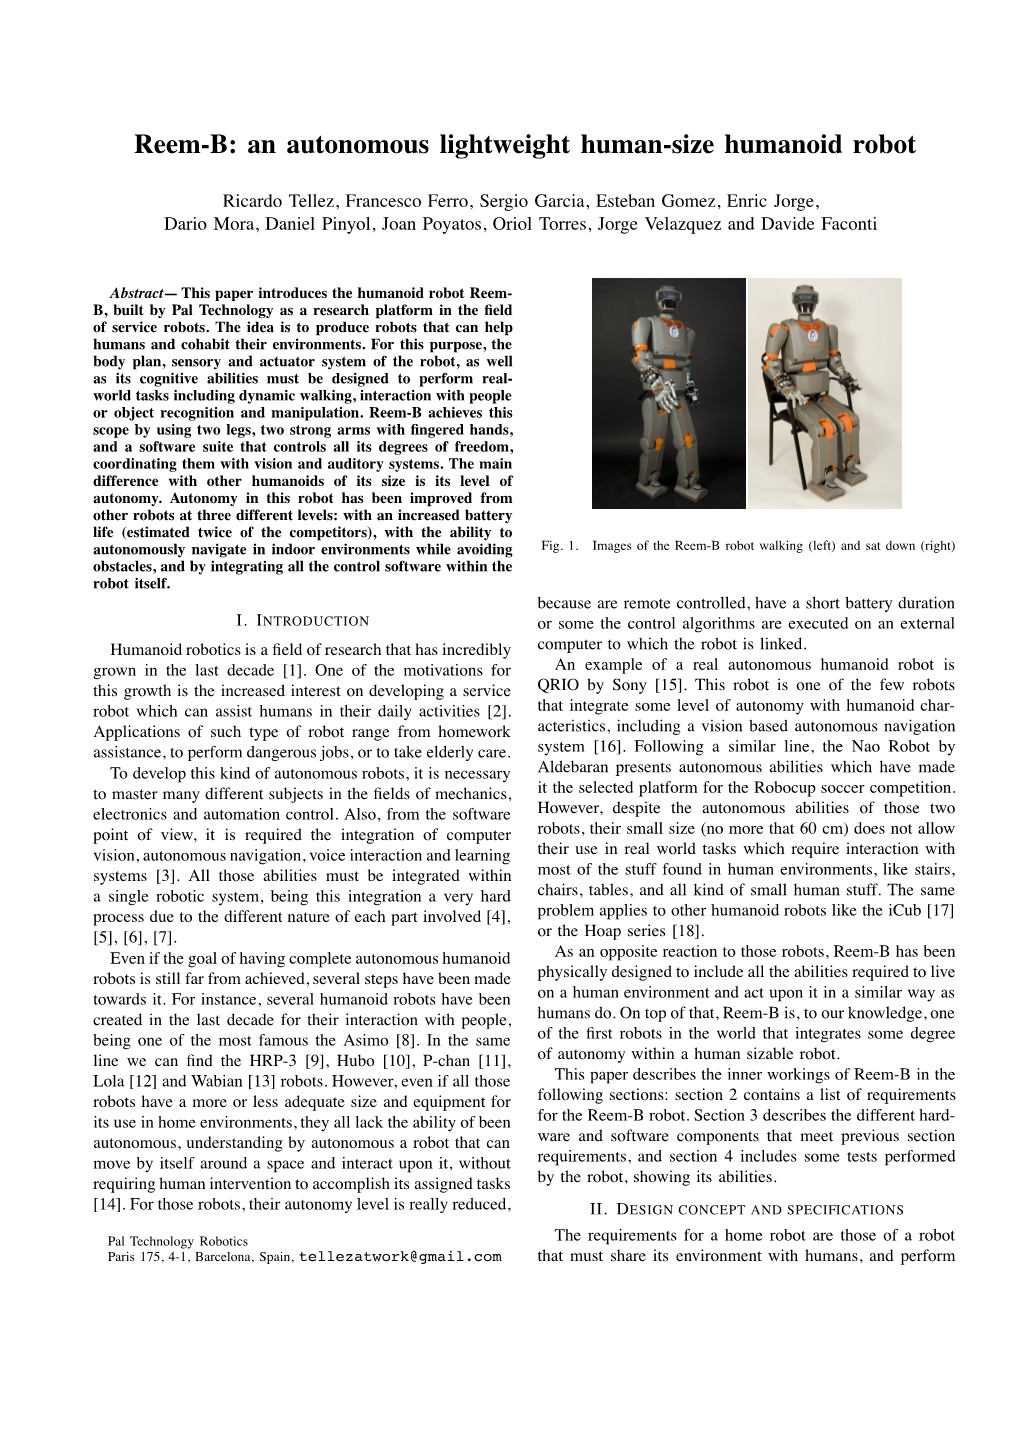 Reem-B: an Autonomous Lightweight Human-Size Humanoid Robot